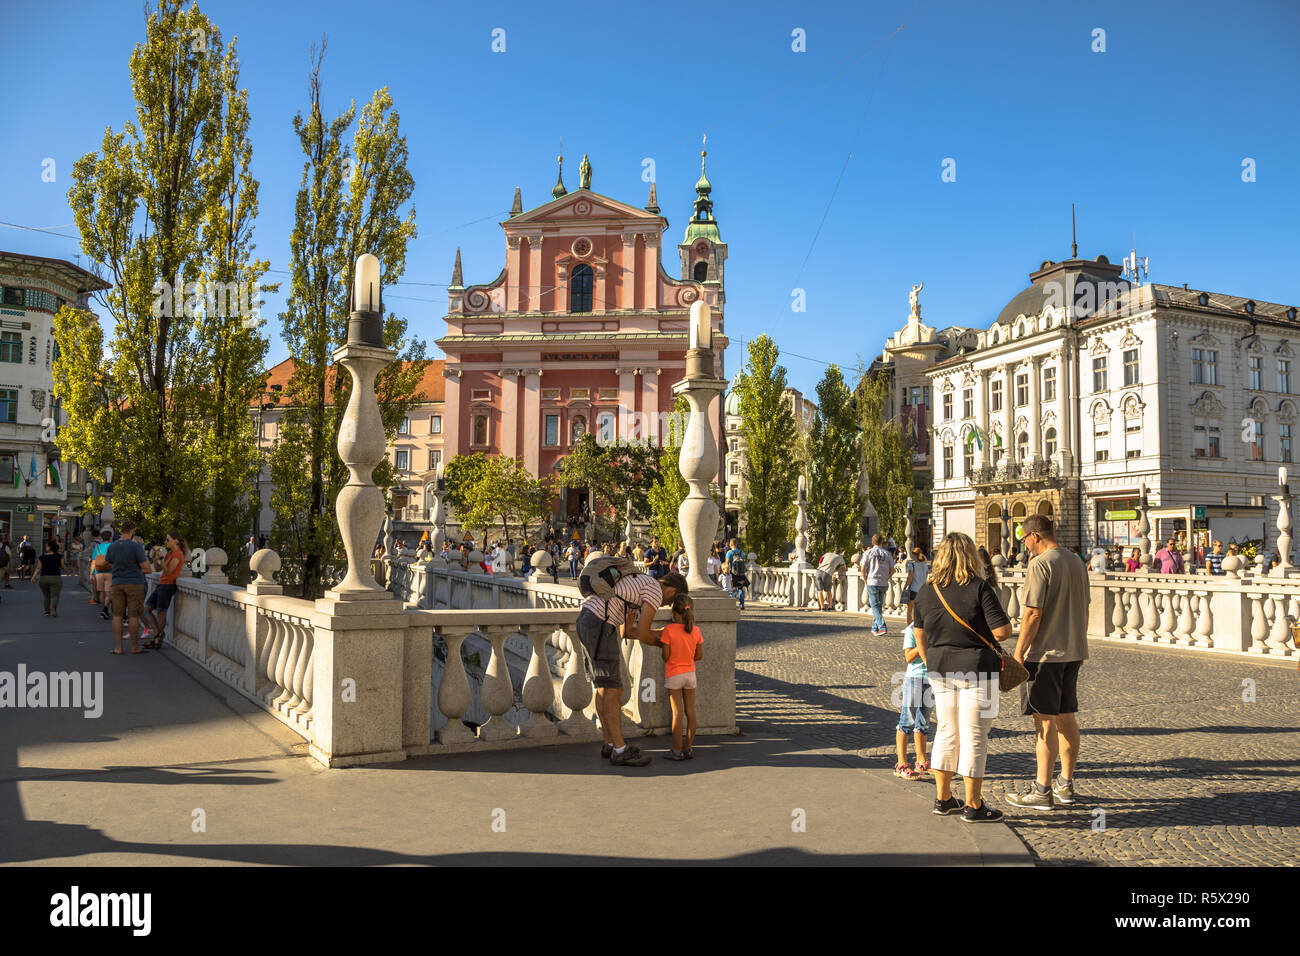 LJUBLJANA, SLOVENIA, AUGUST 11 2017: Tromostovje square afternoon view with tourist activity, Ljubljana, capital of Slovenia Stock Photo